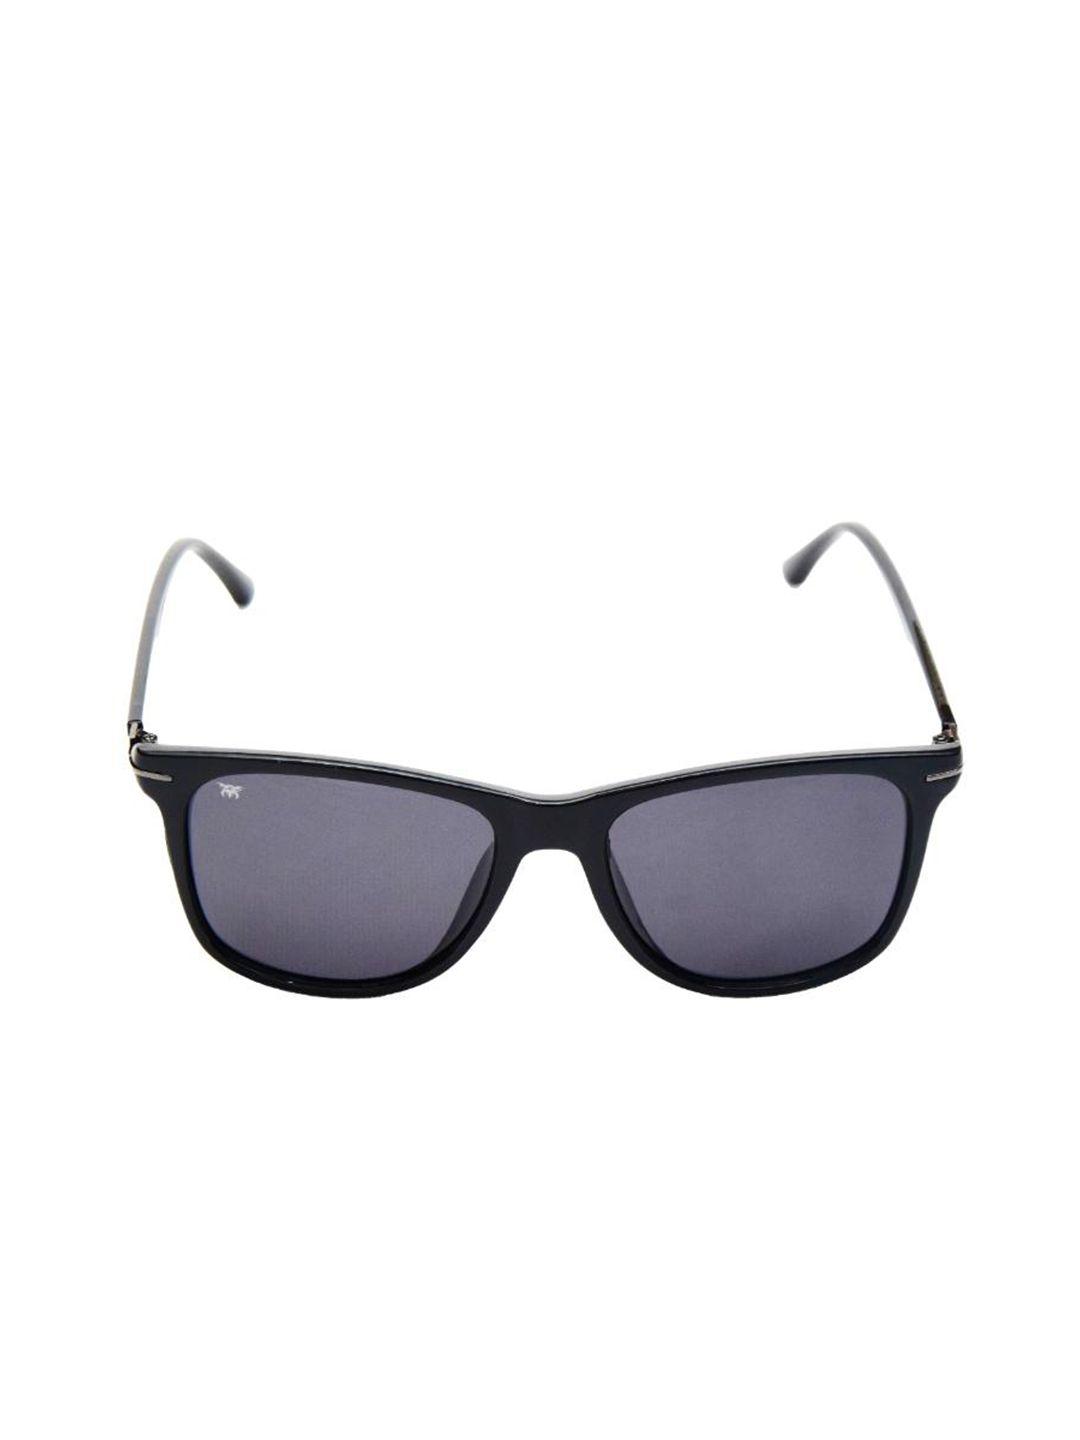 mayhem unisex rectangle sunglasses with uv protected lens aup6090c3